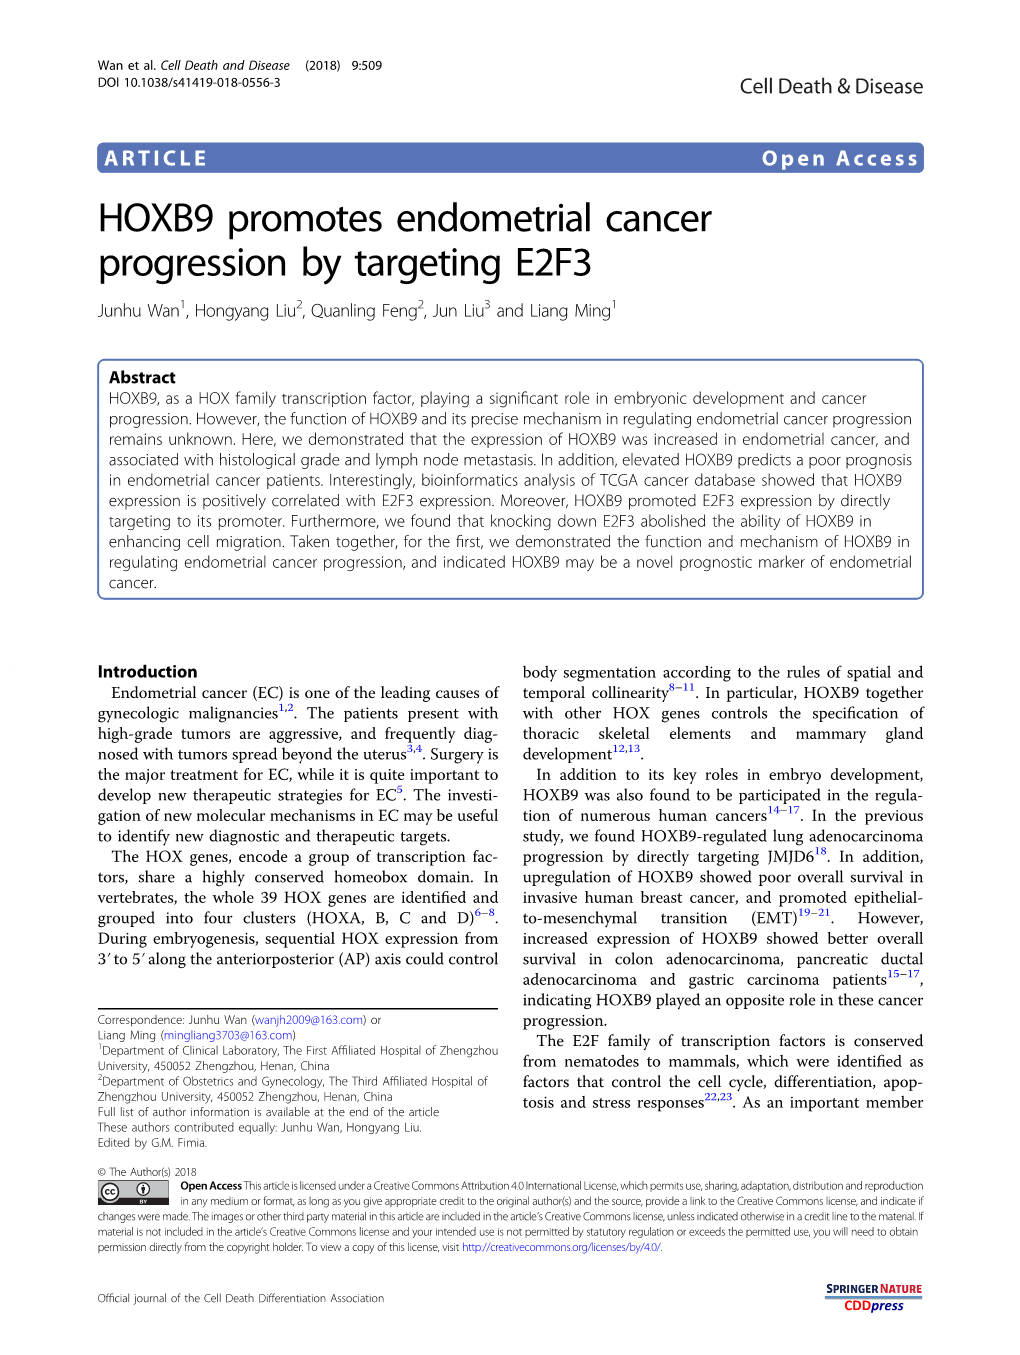 HOXB9 Promotes Endometrial Cancer Progression by Targeting E2F3 Junhu Wan1,Hongyangliu2, Quanling Feng2,Junliu3 and Liang Ming1